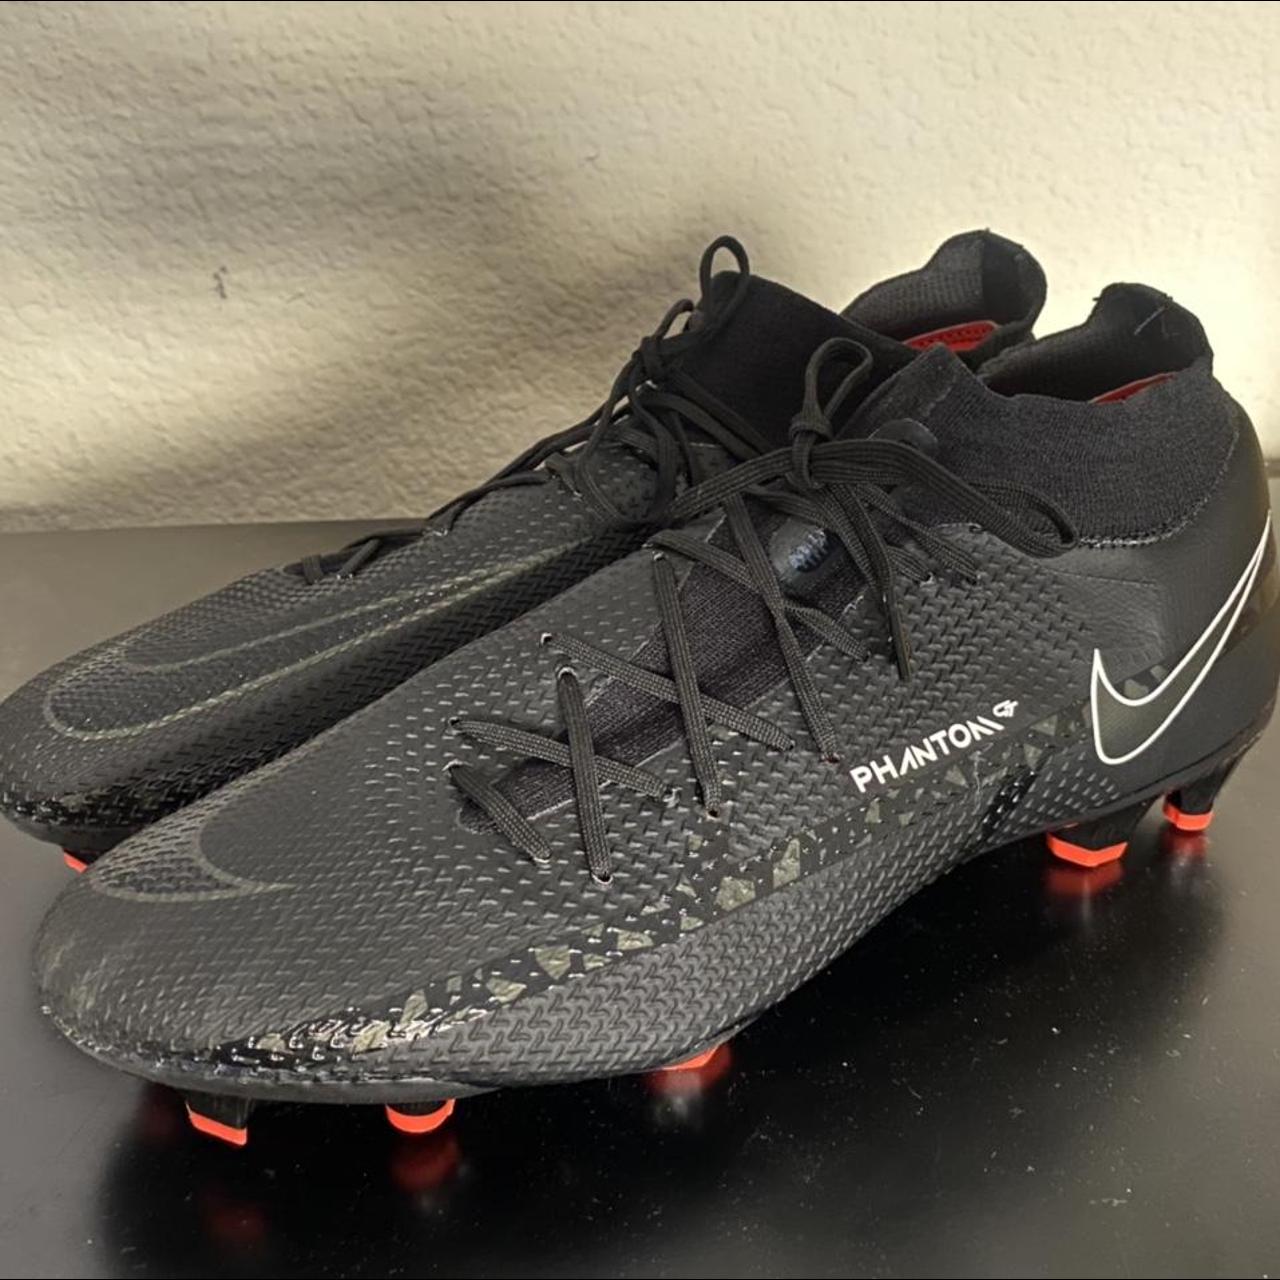 Product Image 2 - Nike Phantom Soccer Cleats/Football Boots

worn